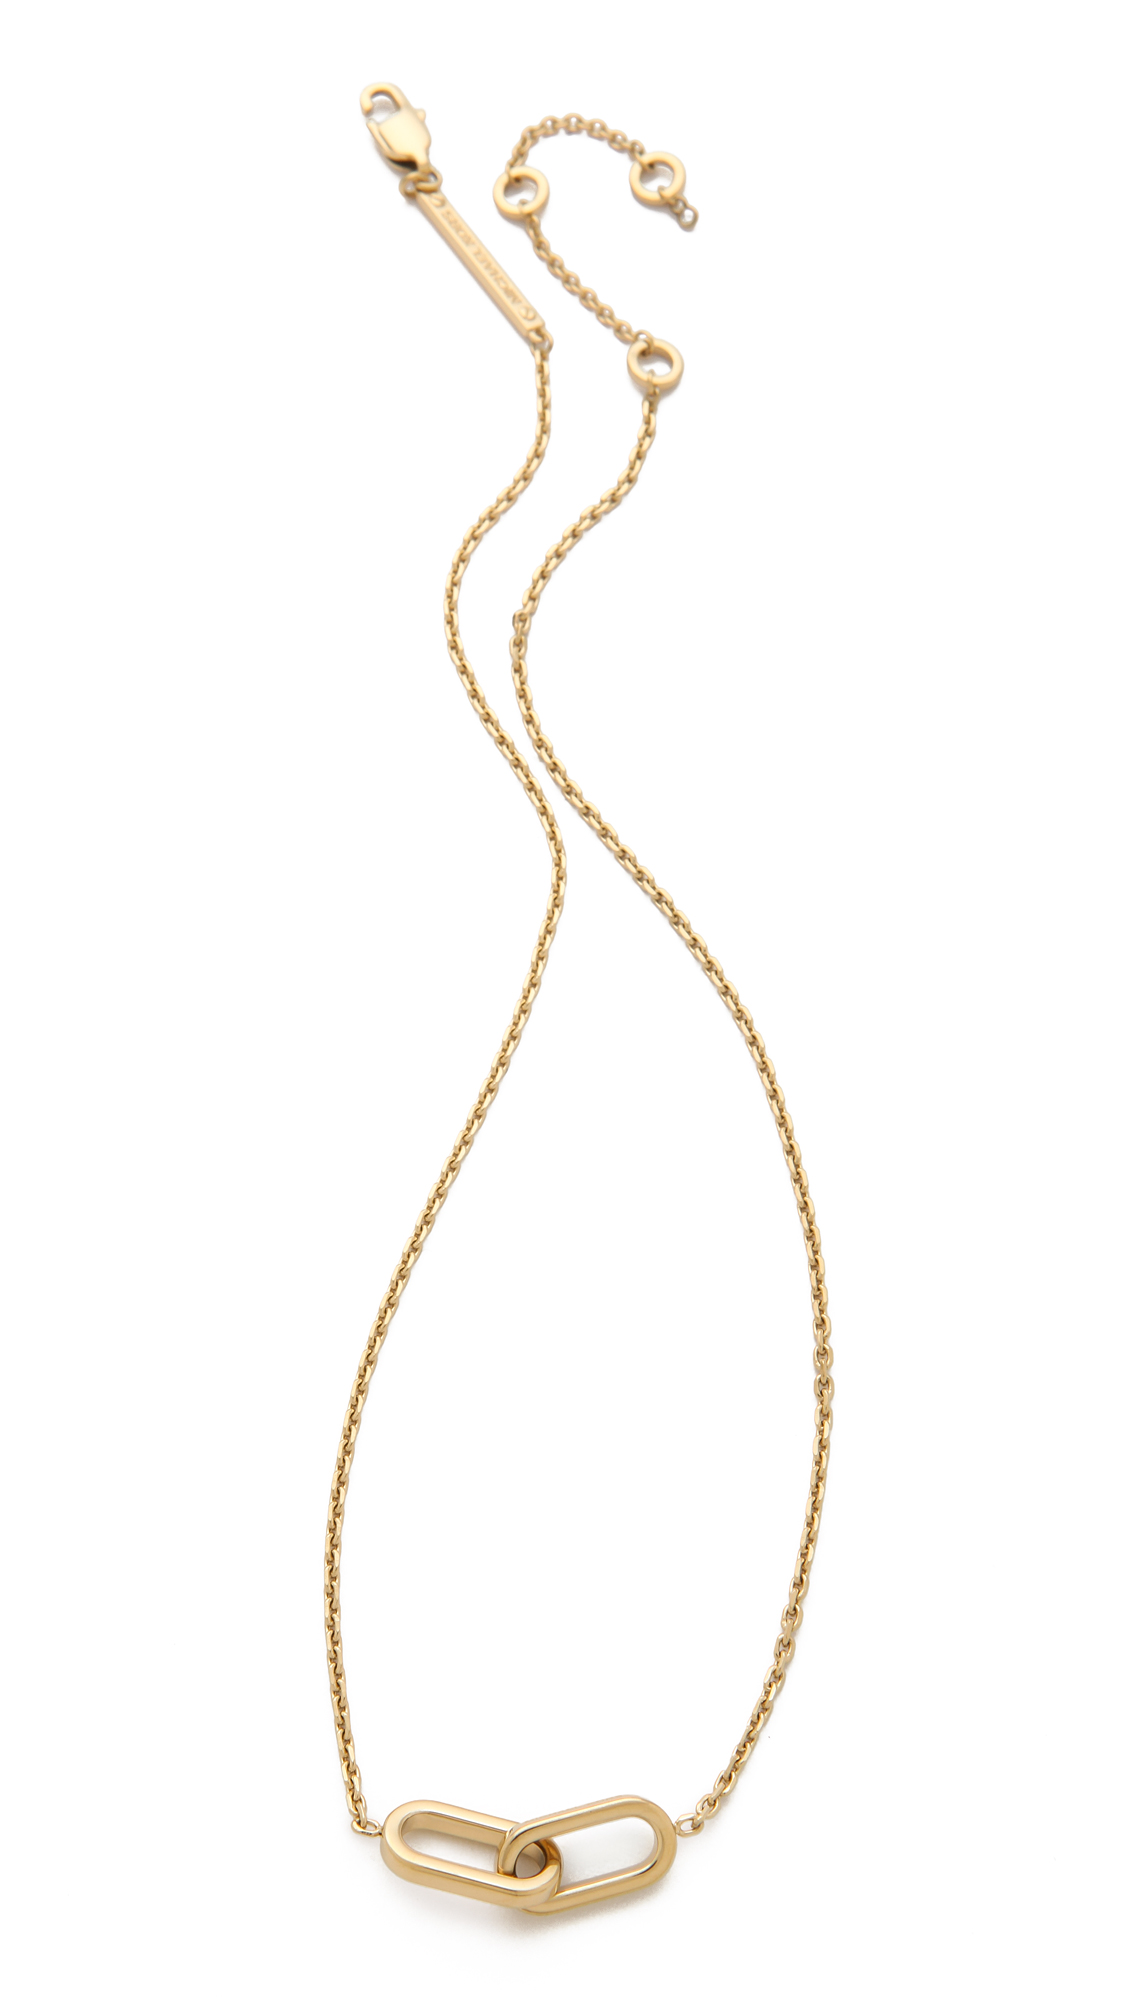 Michael Kors Interlocking Necklace in Gold